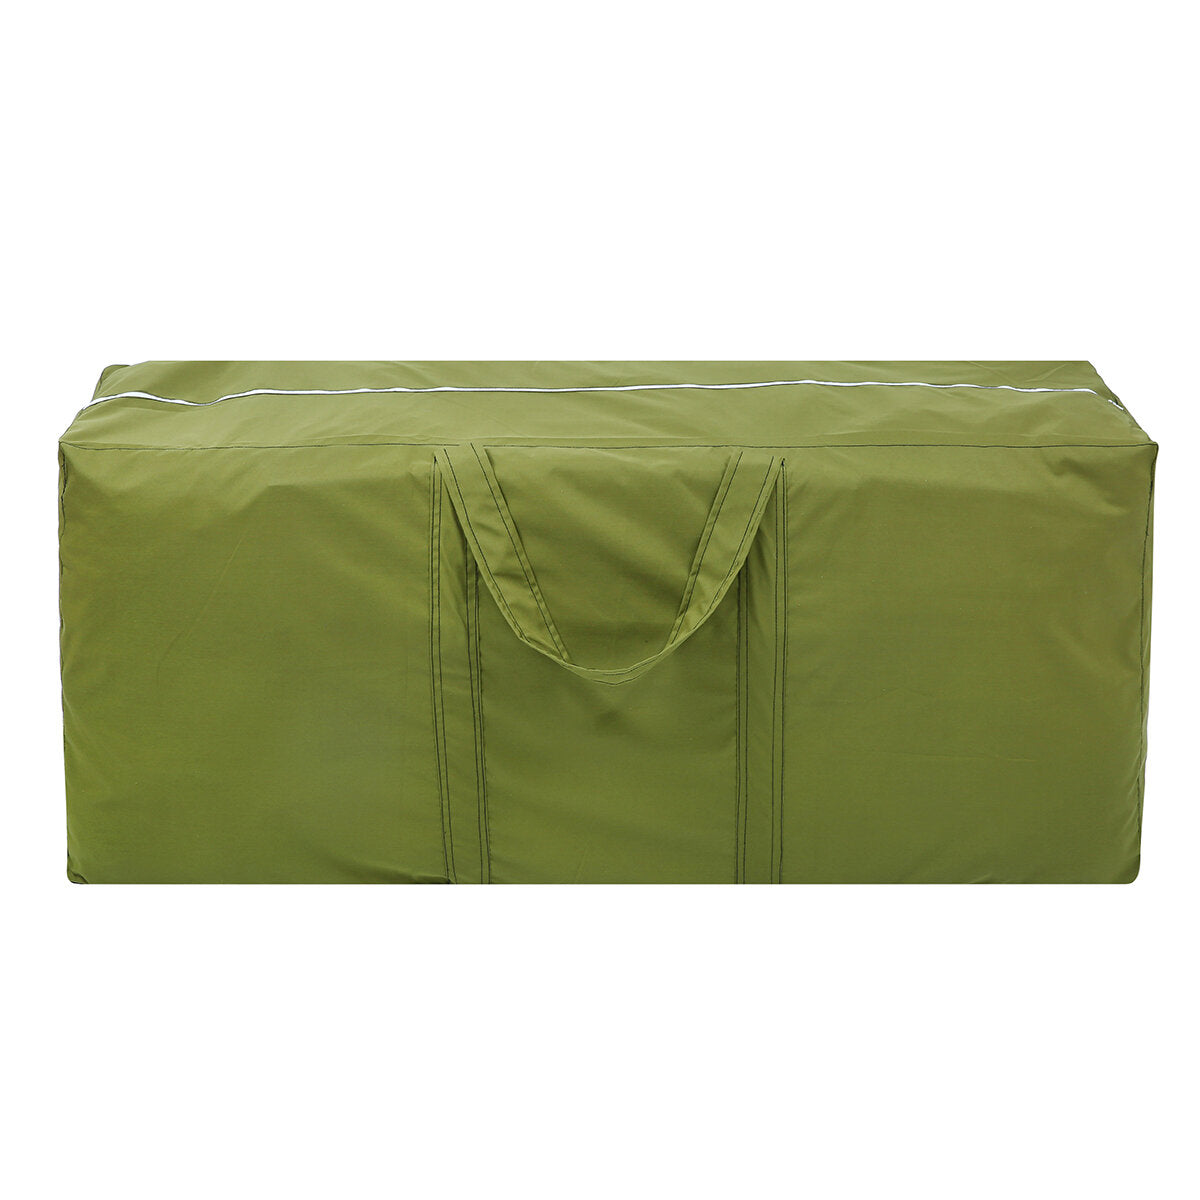 Outdoor Garden Patio Furniture Waterproof Cover Dust Rain Protector Cushion Storage Bag Case